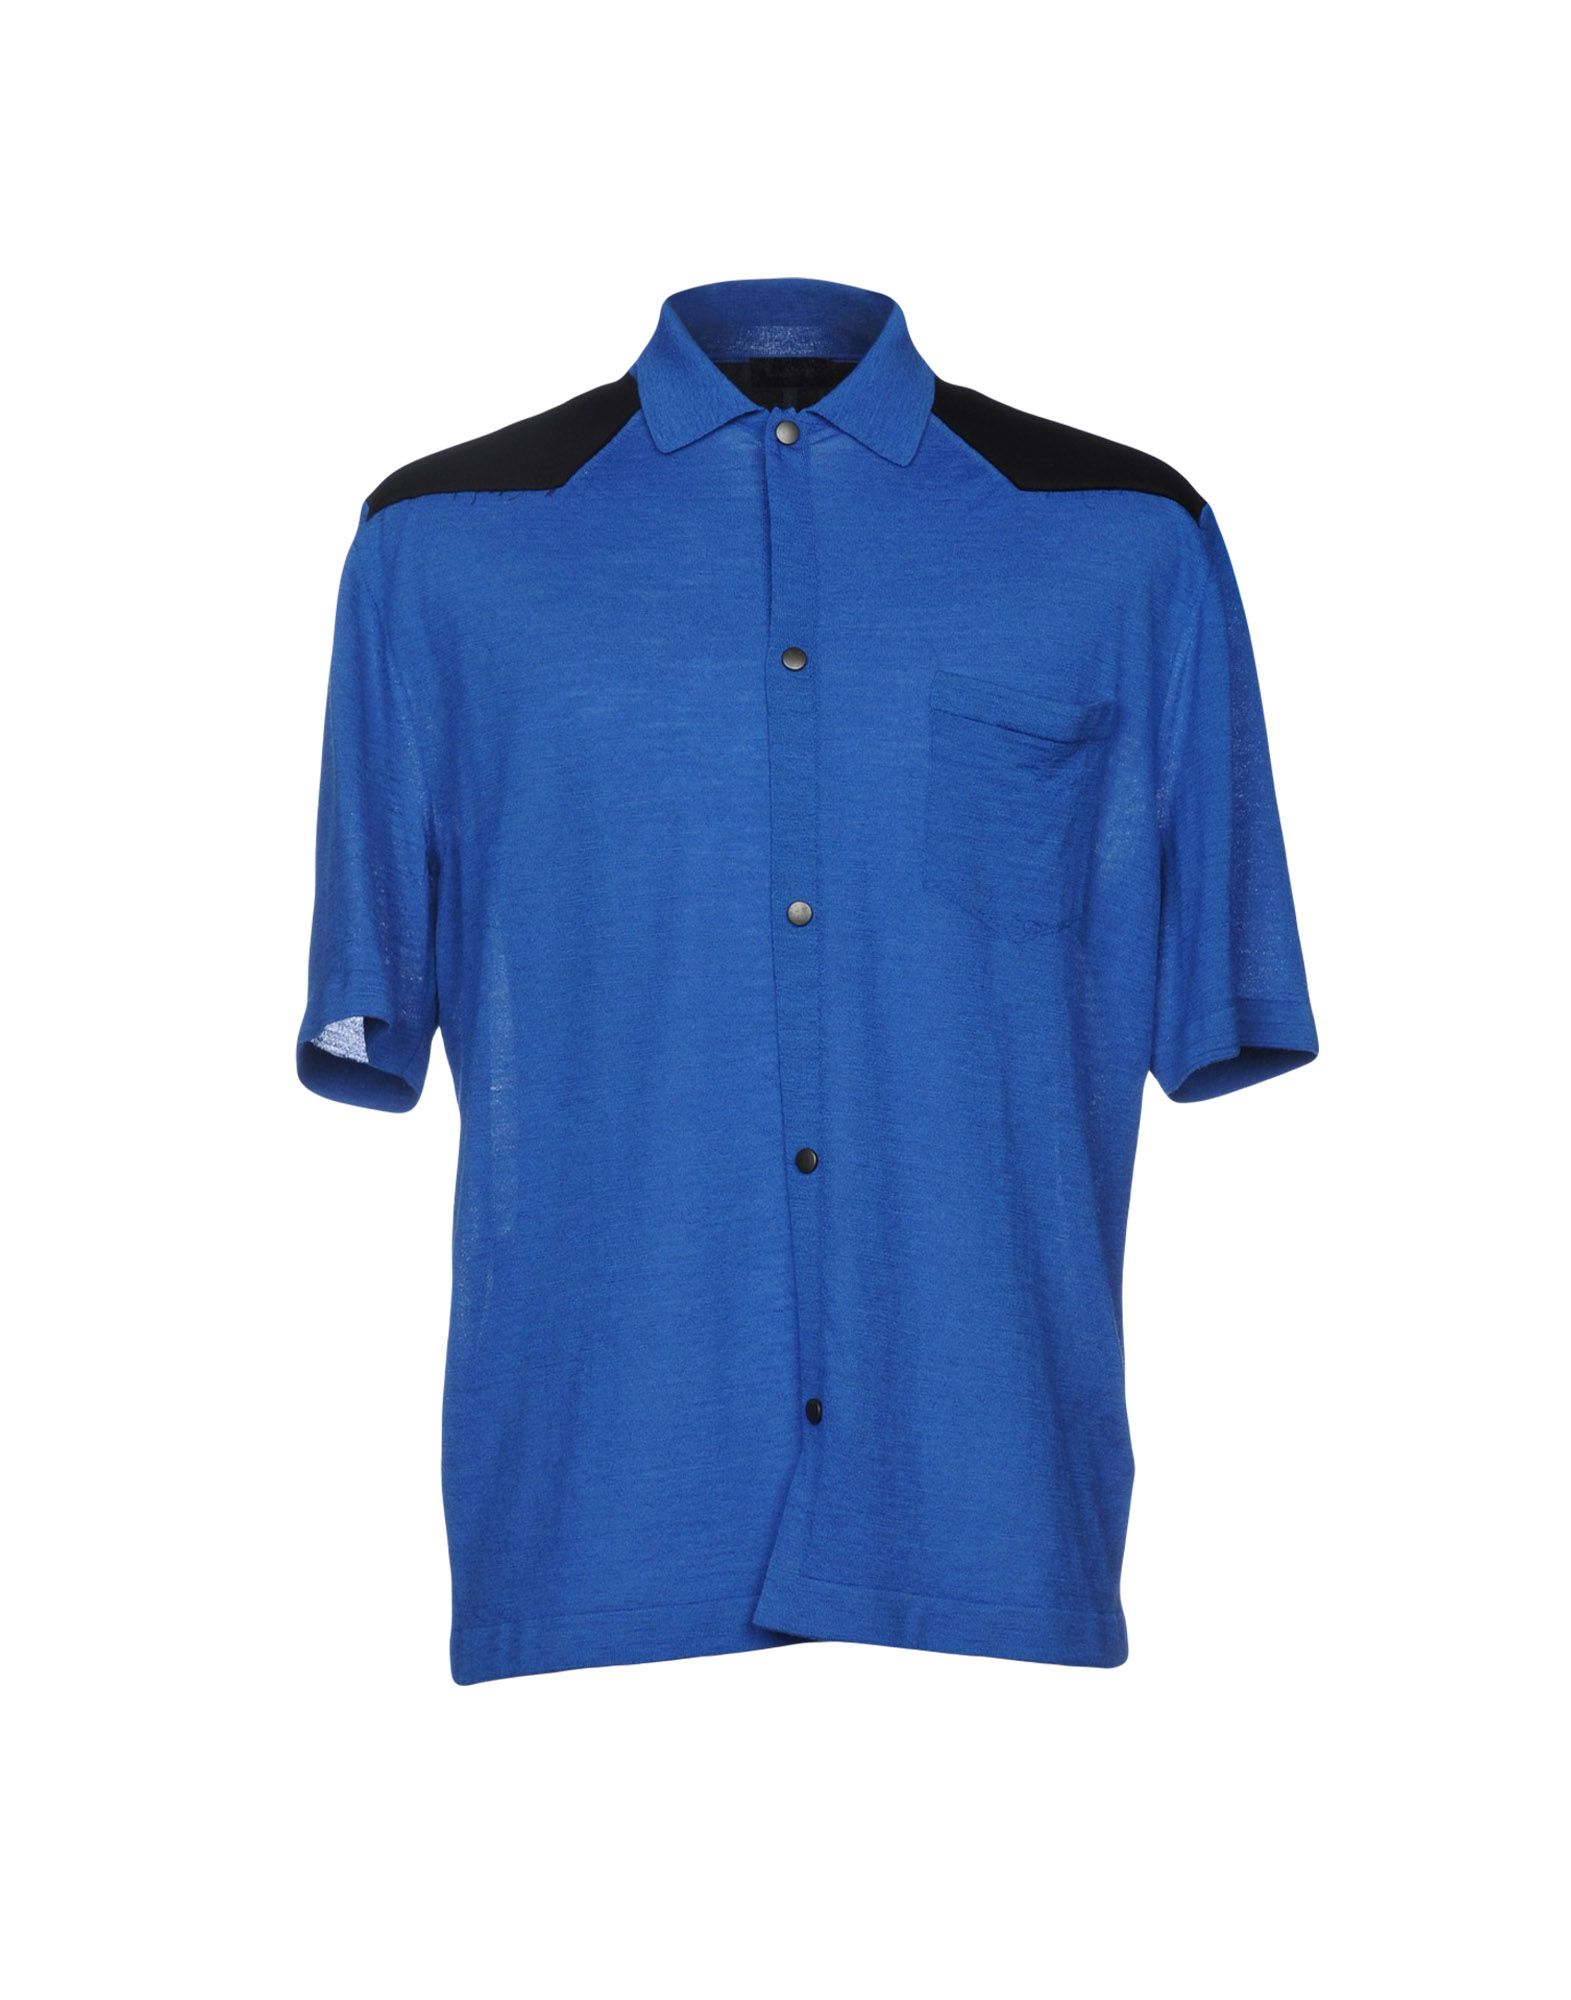 LANVIN Solid color shirt,38745964RX 6